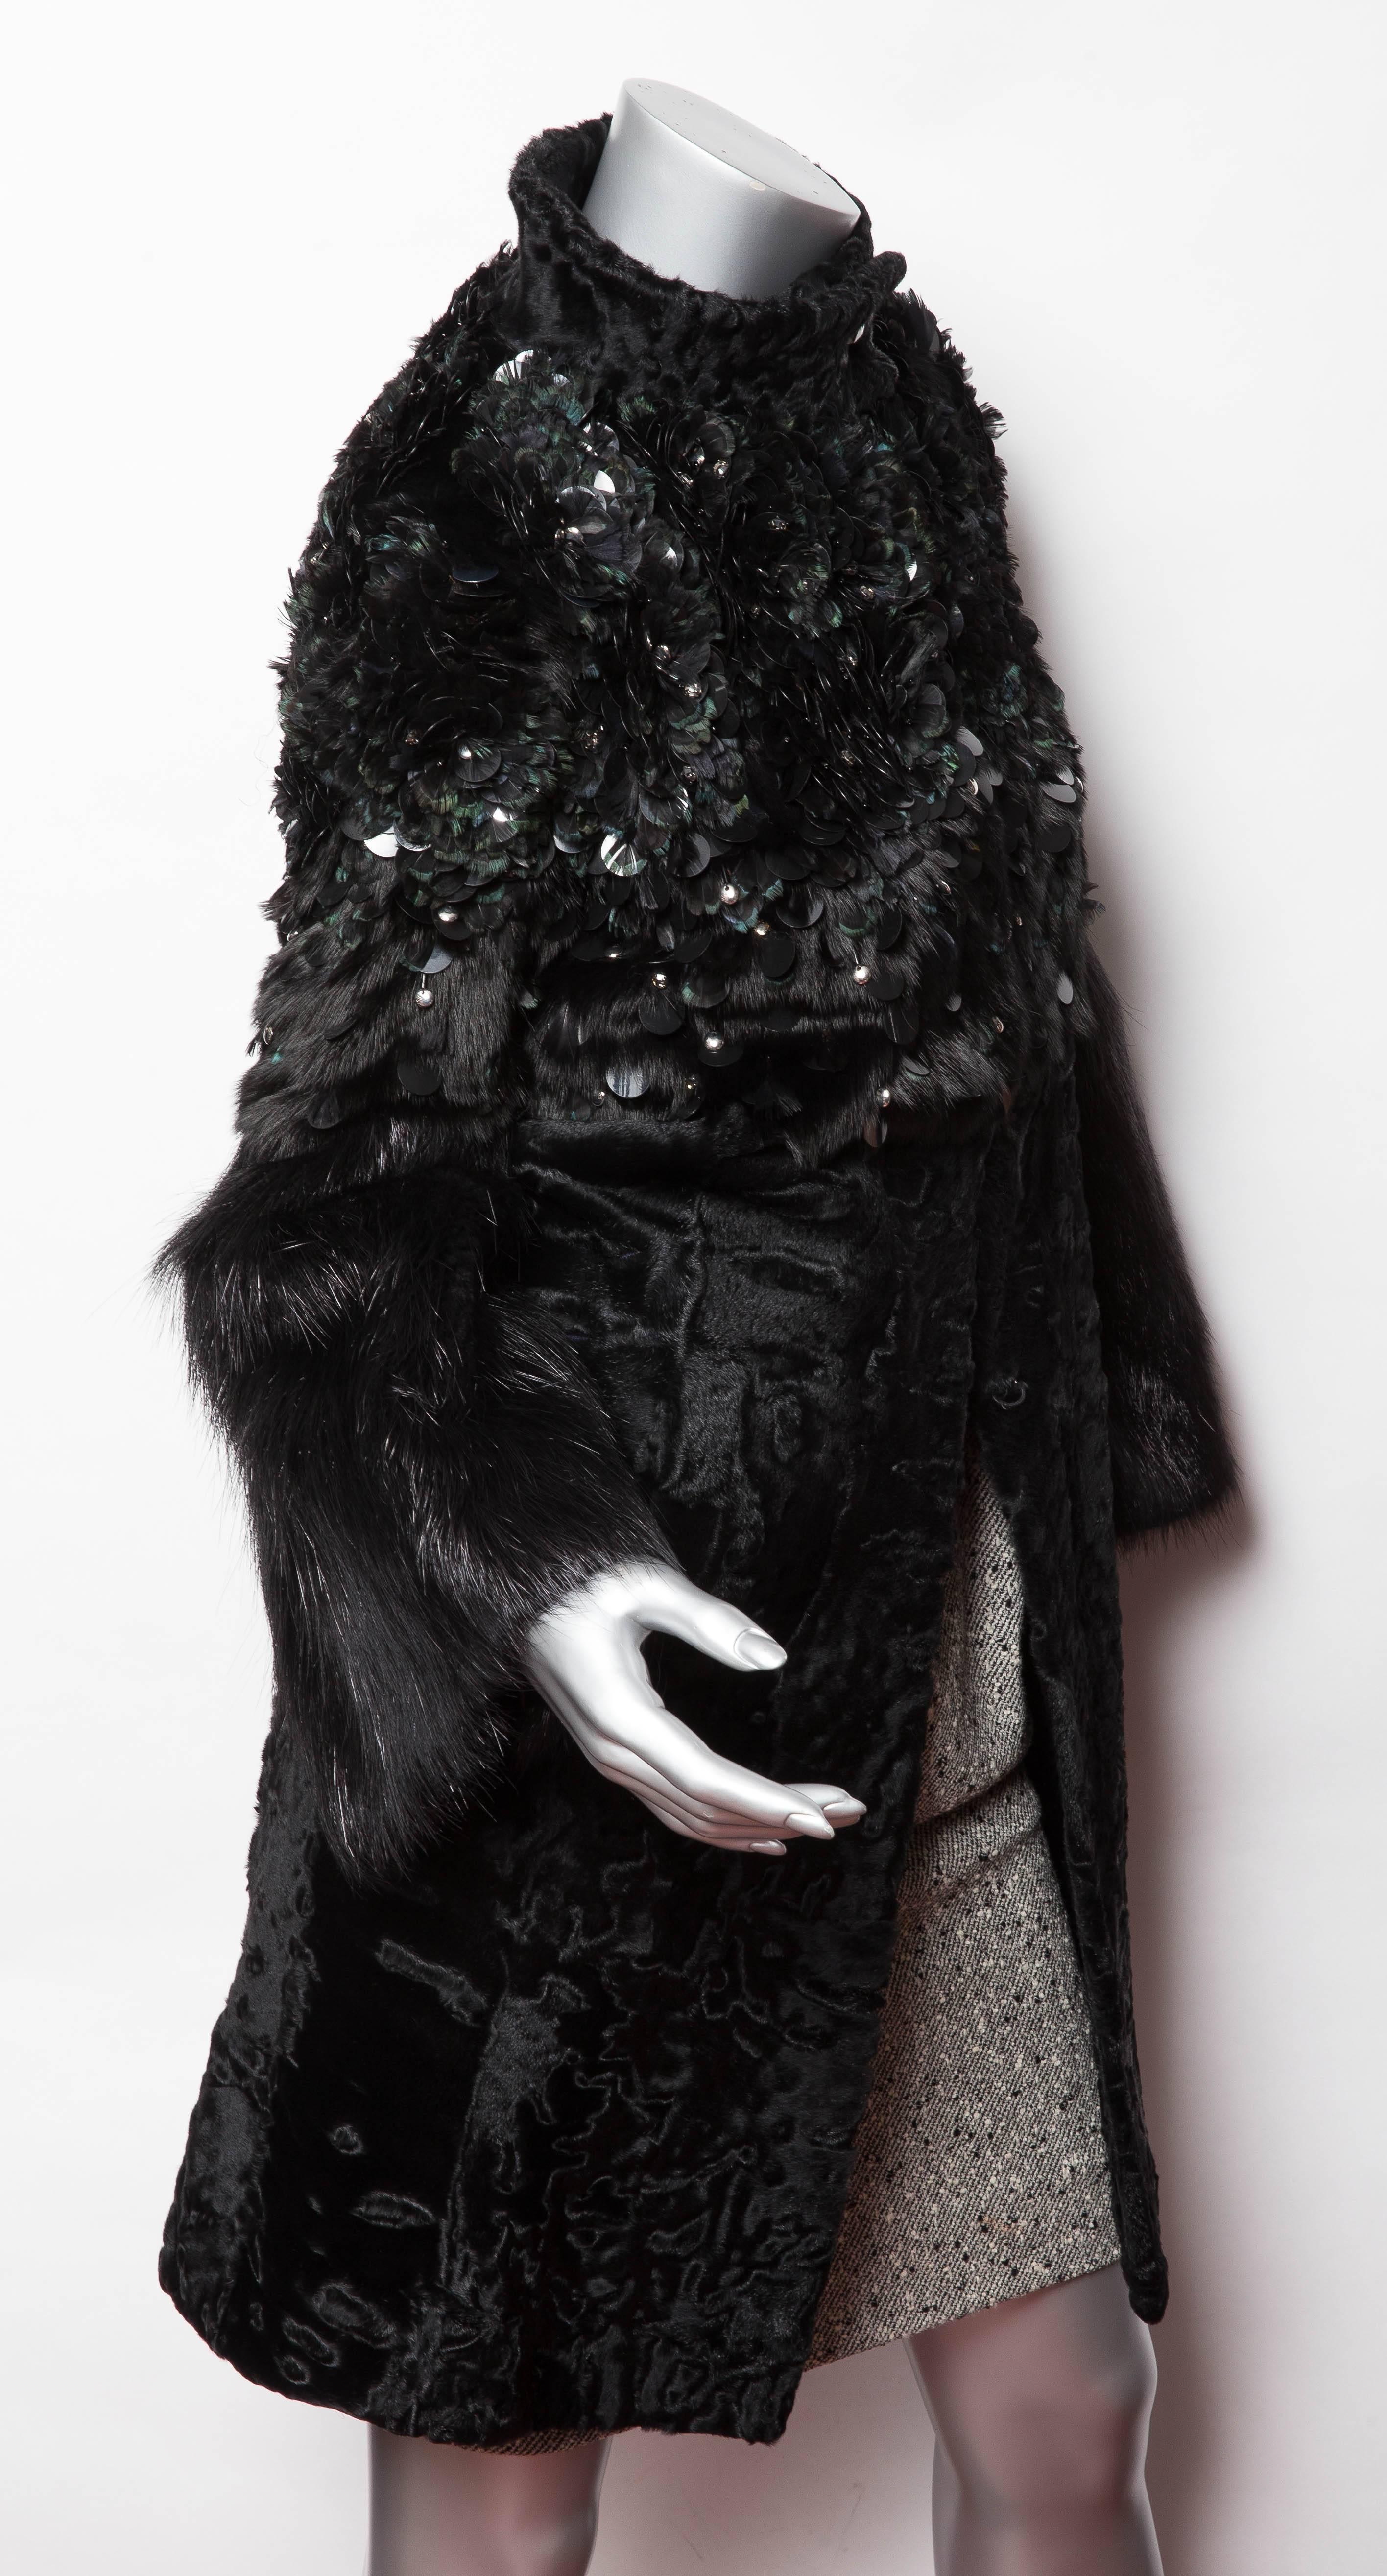 Black Gucci Runway Mink and Persian Lamb Coat w/ Paillettes and Crystals - Size 4 / 6